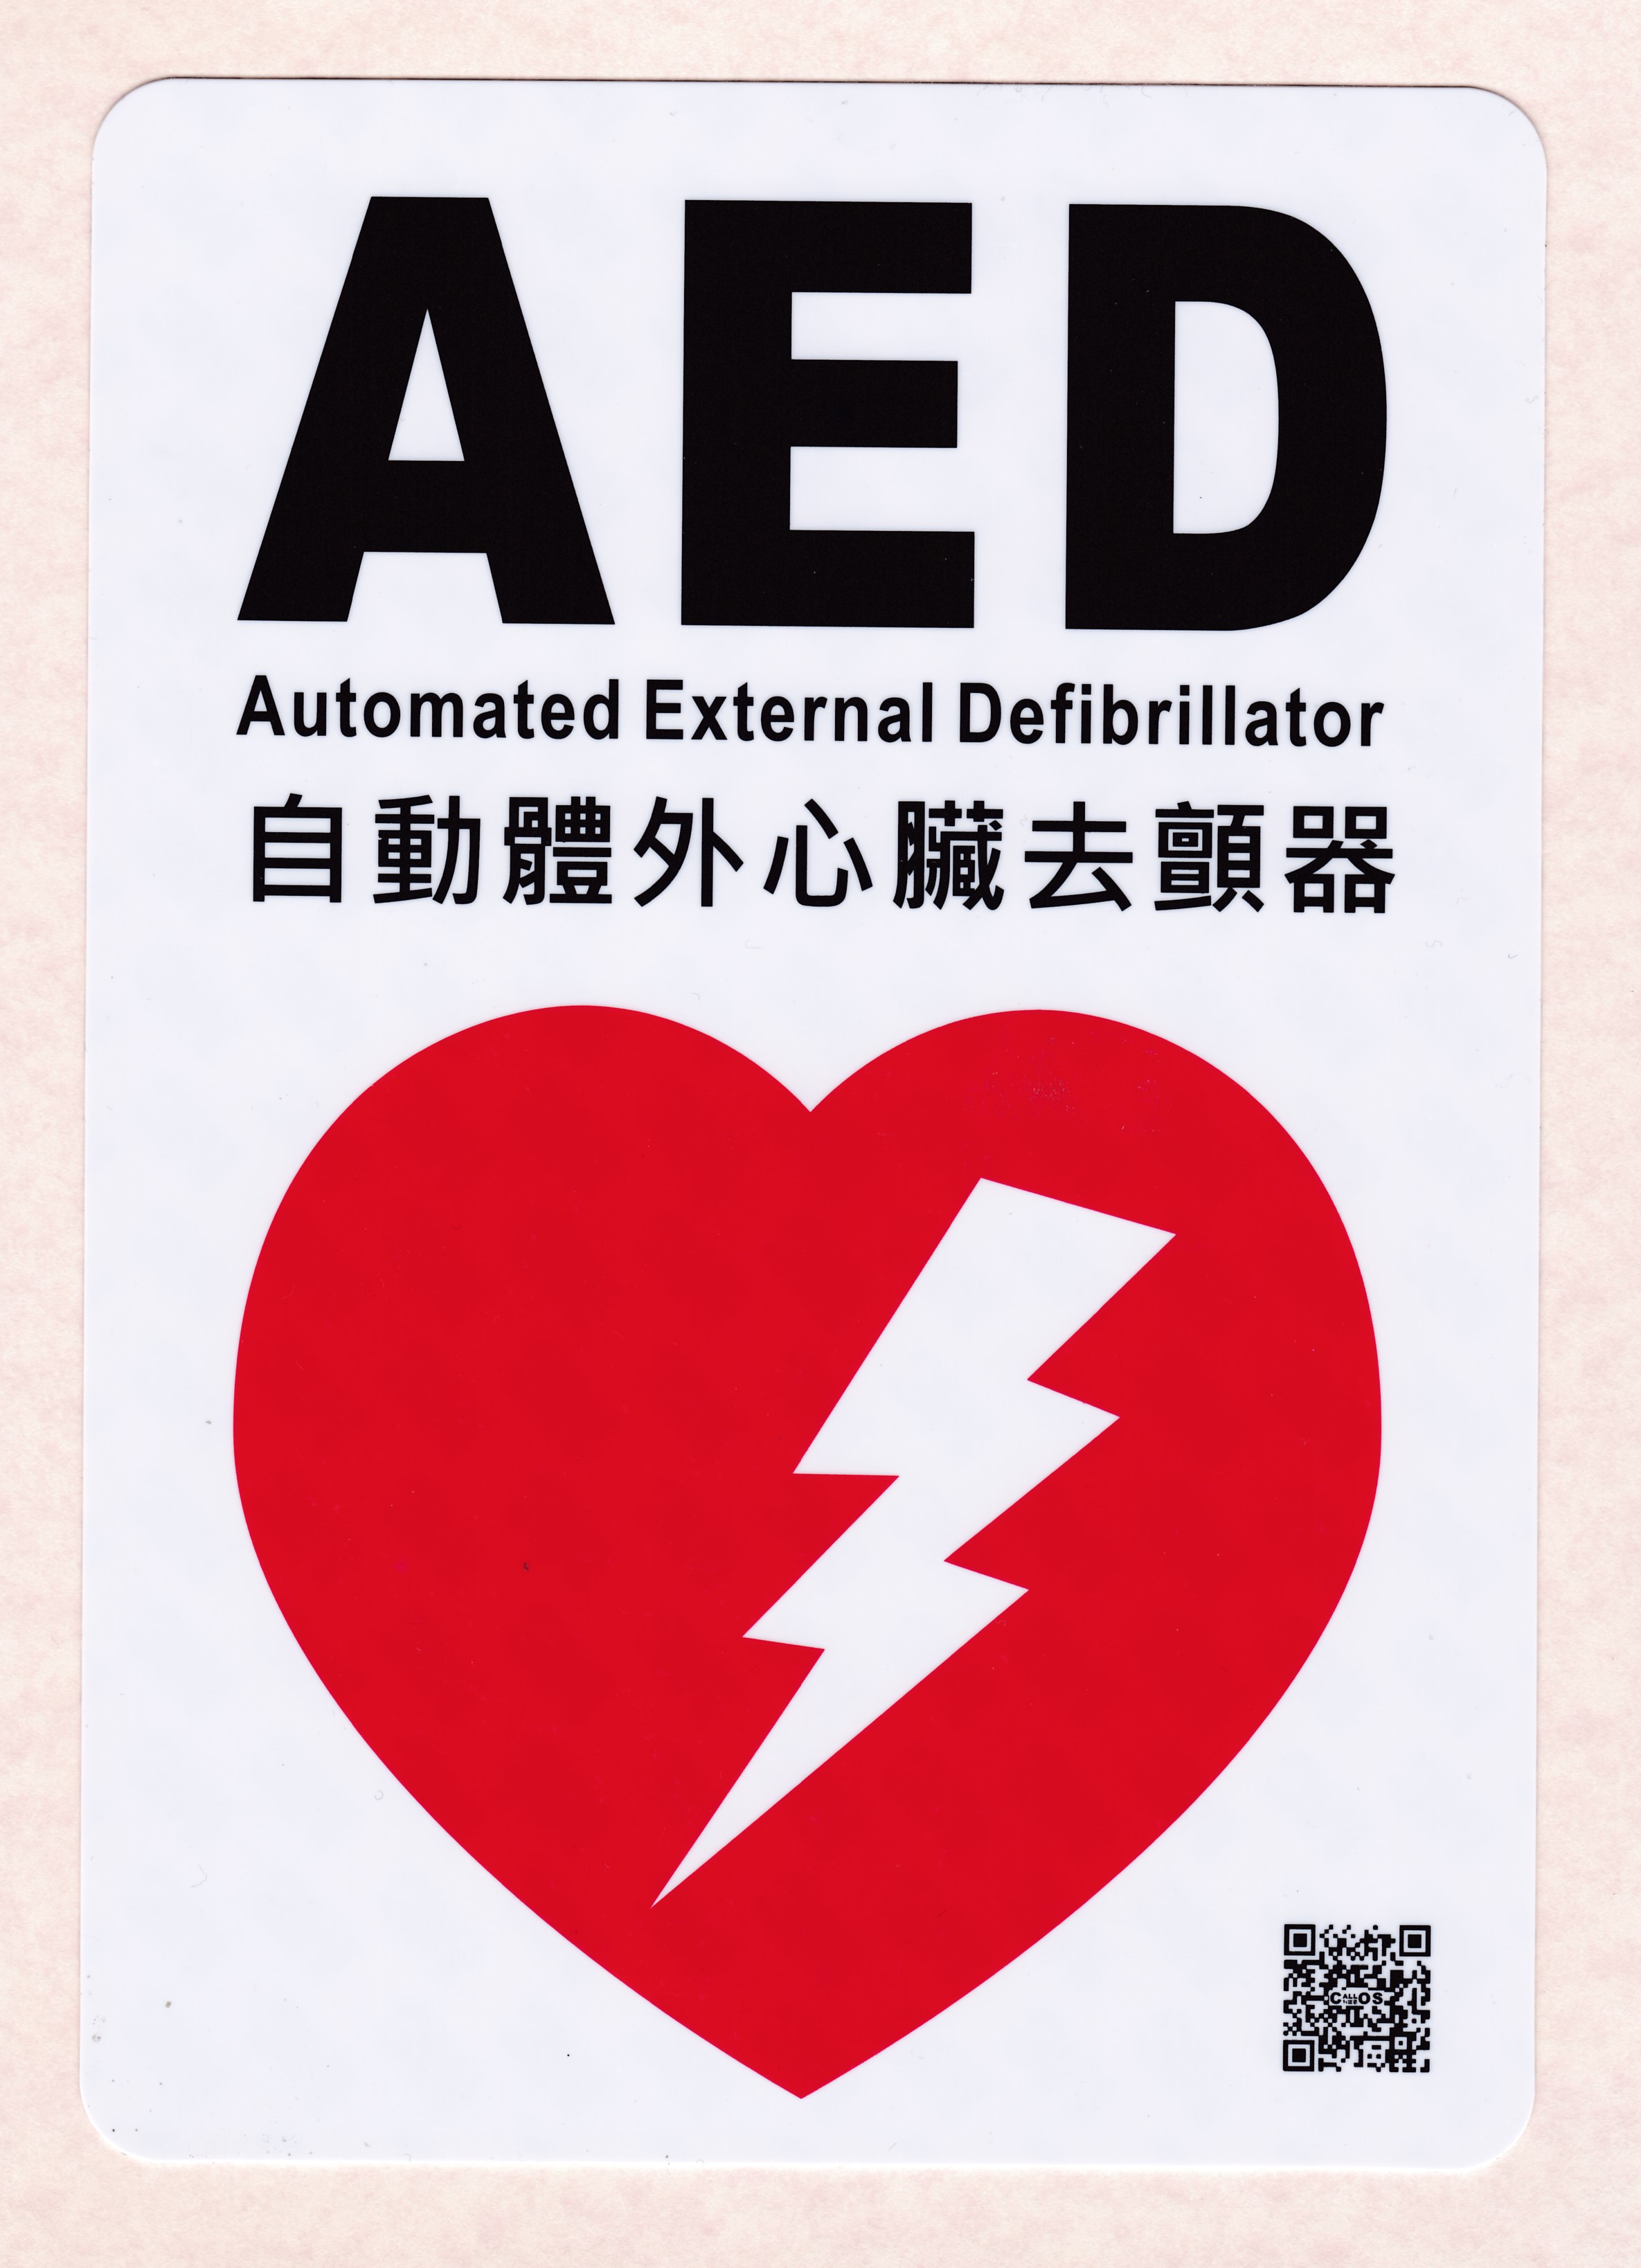 AED Flat Signage